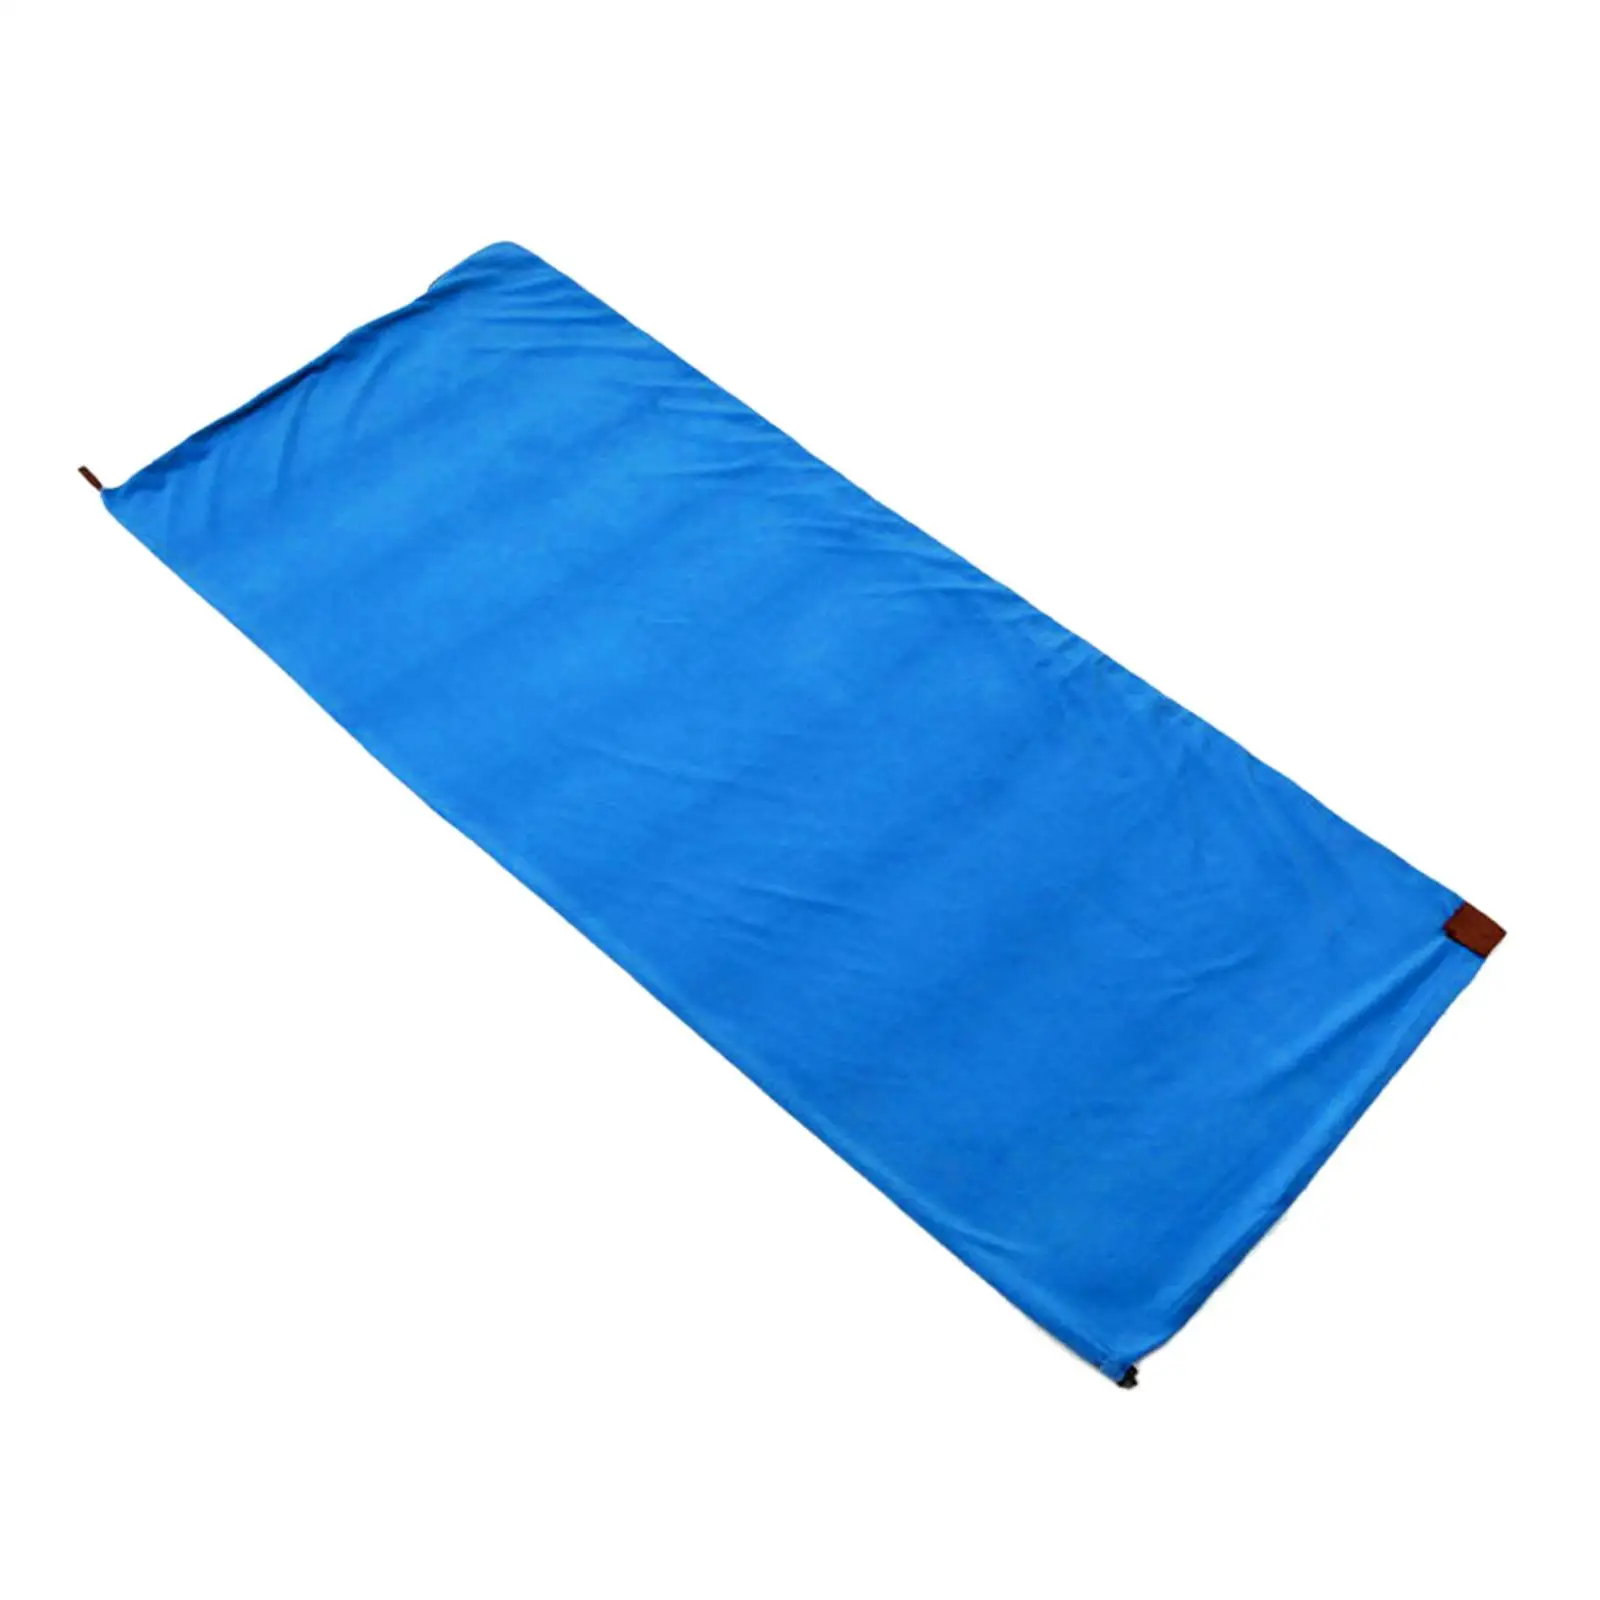 Camping Blanket Cushion Thermal Trips Outdoor Soft Fleece Sleeping Bag Liner